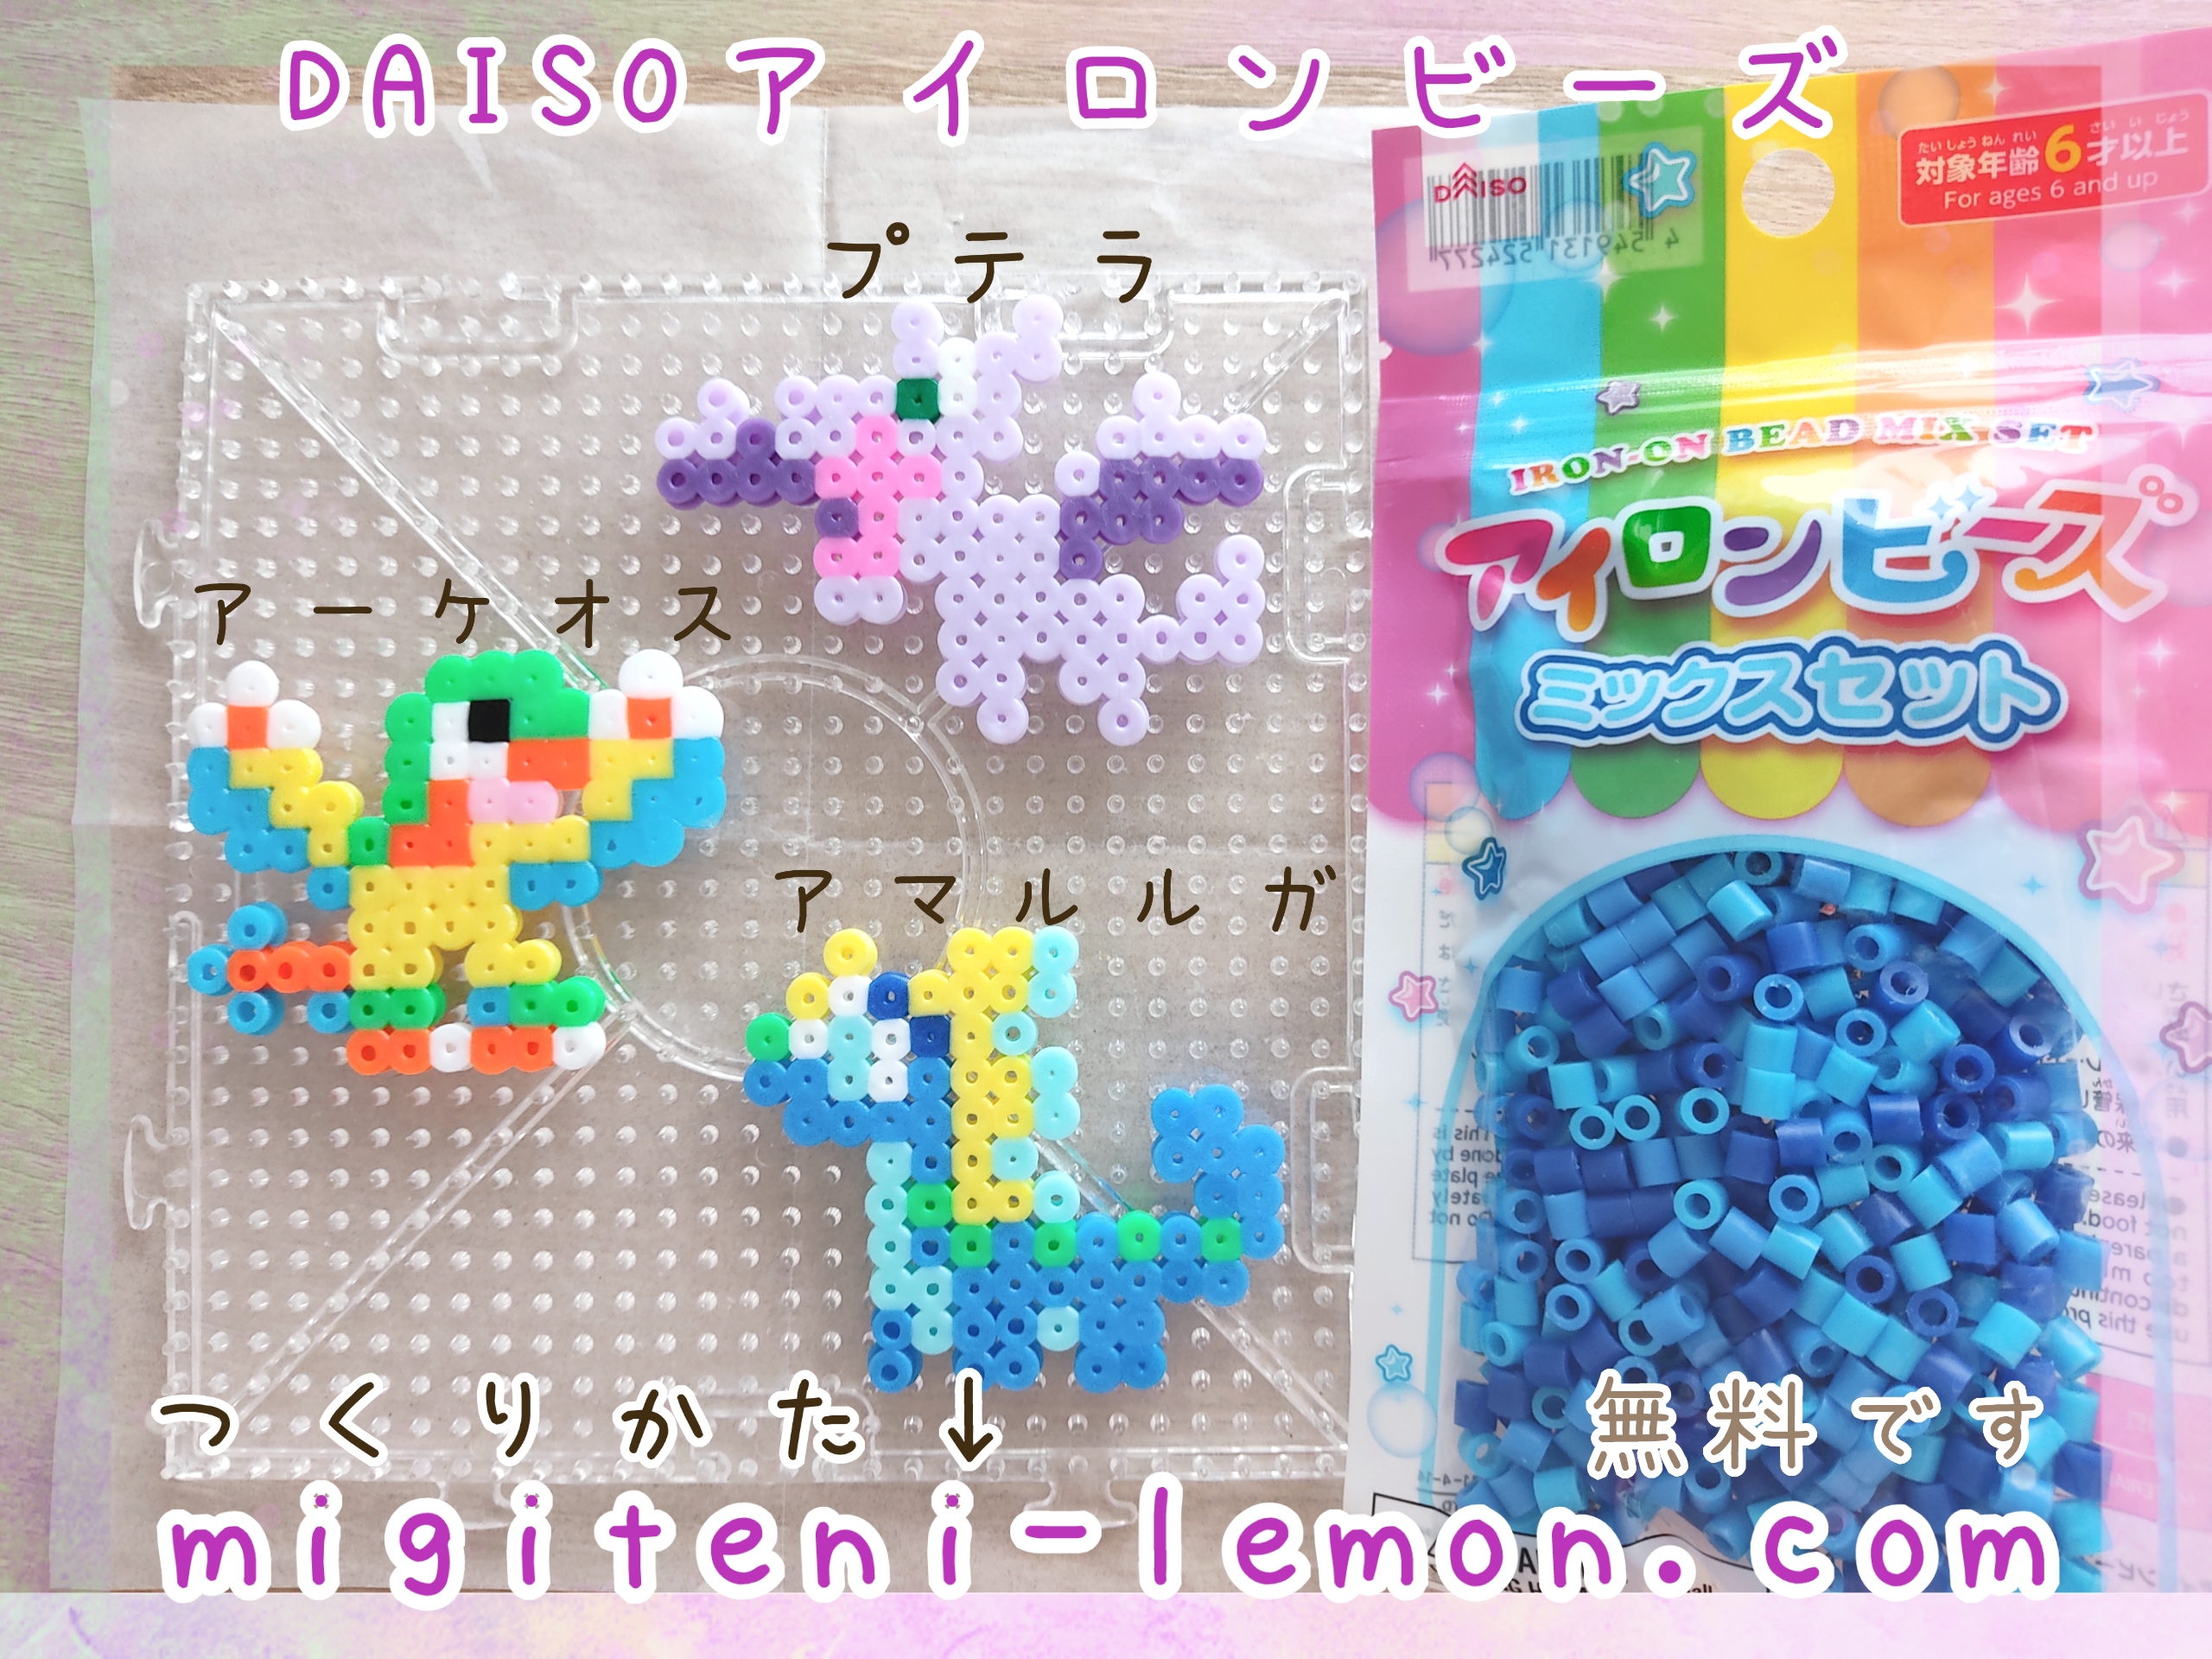 archeos-archeops-amaruruga-aurorus-kaseki-dinosaur-kawaii-pokemon-handmade-iron-beads-free-zuan-daiso-square-small-kids